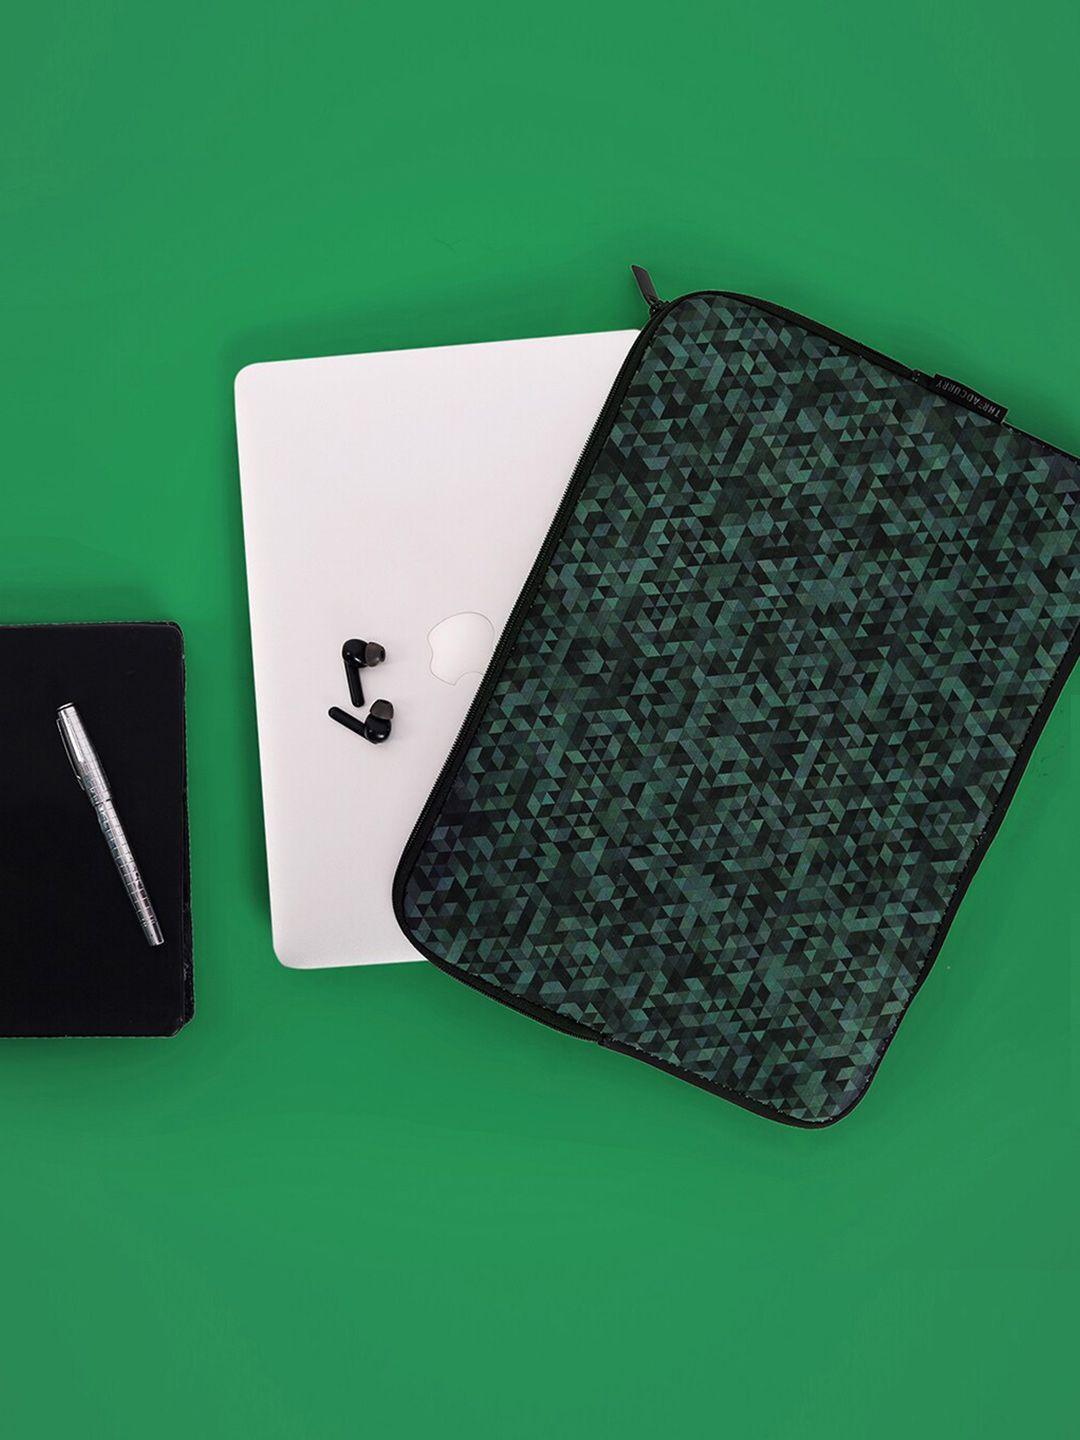 threadcurry unisex black & green printed laptop sleeve